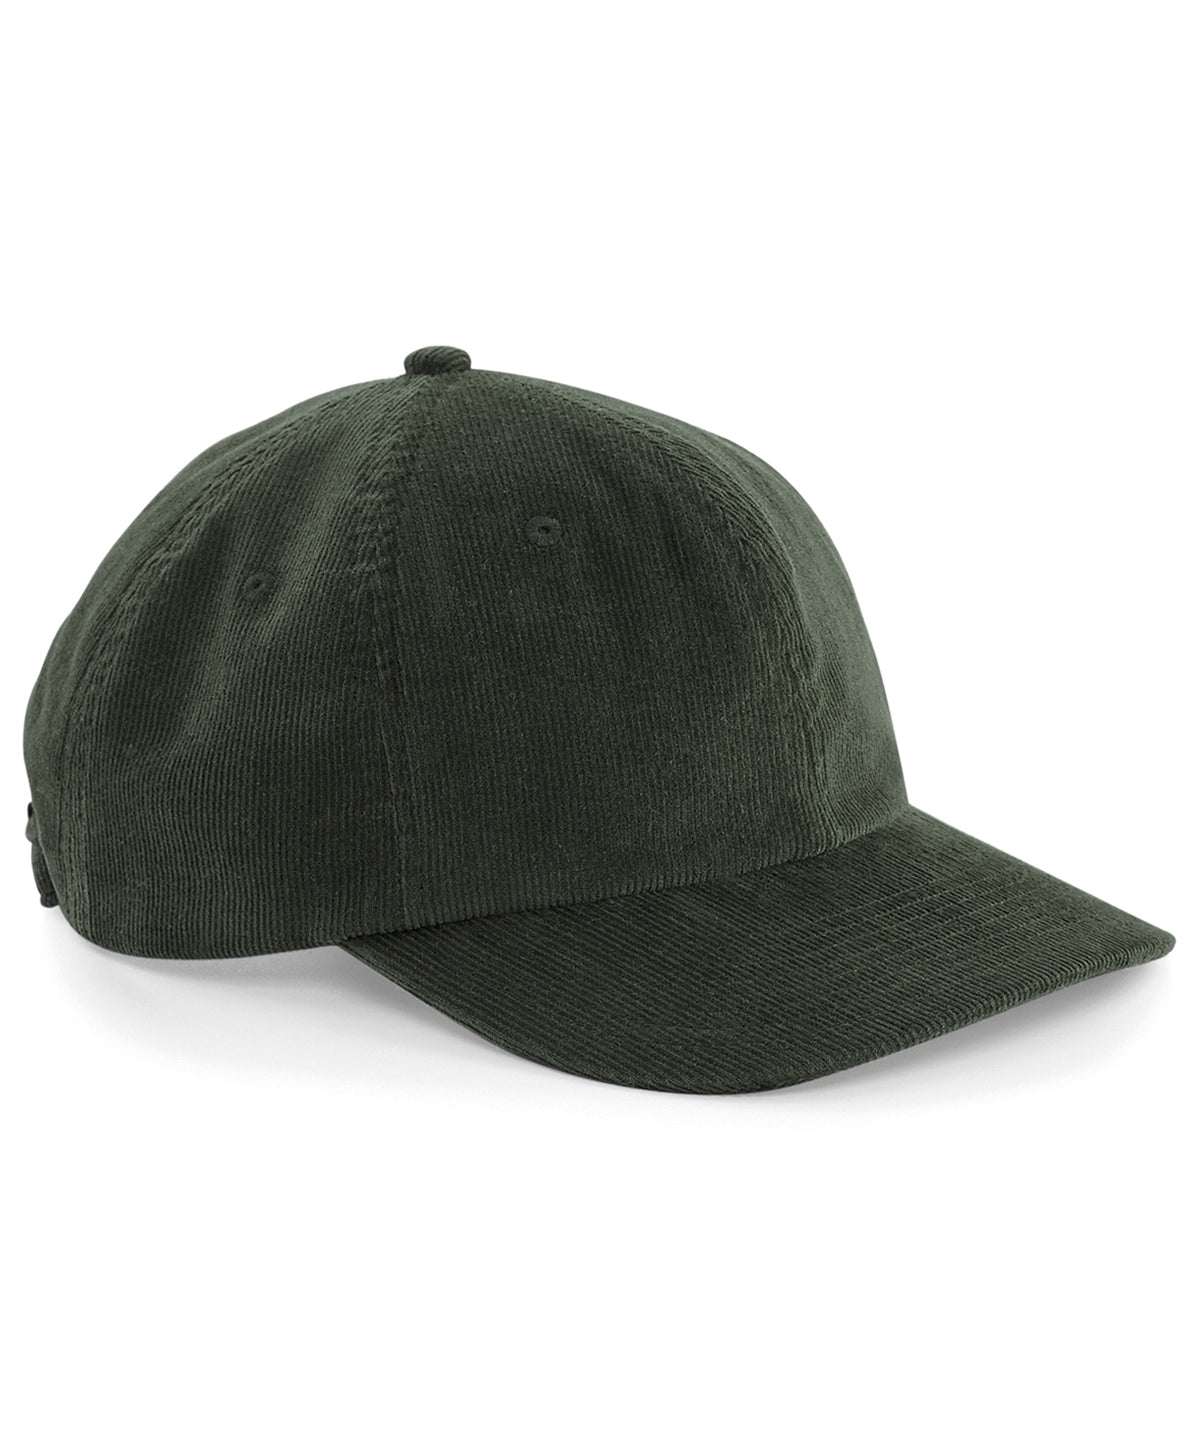 Personalised Caps - Olive Beechfield Heritage cord cap